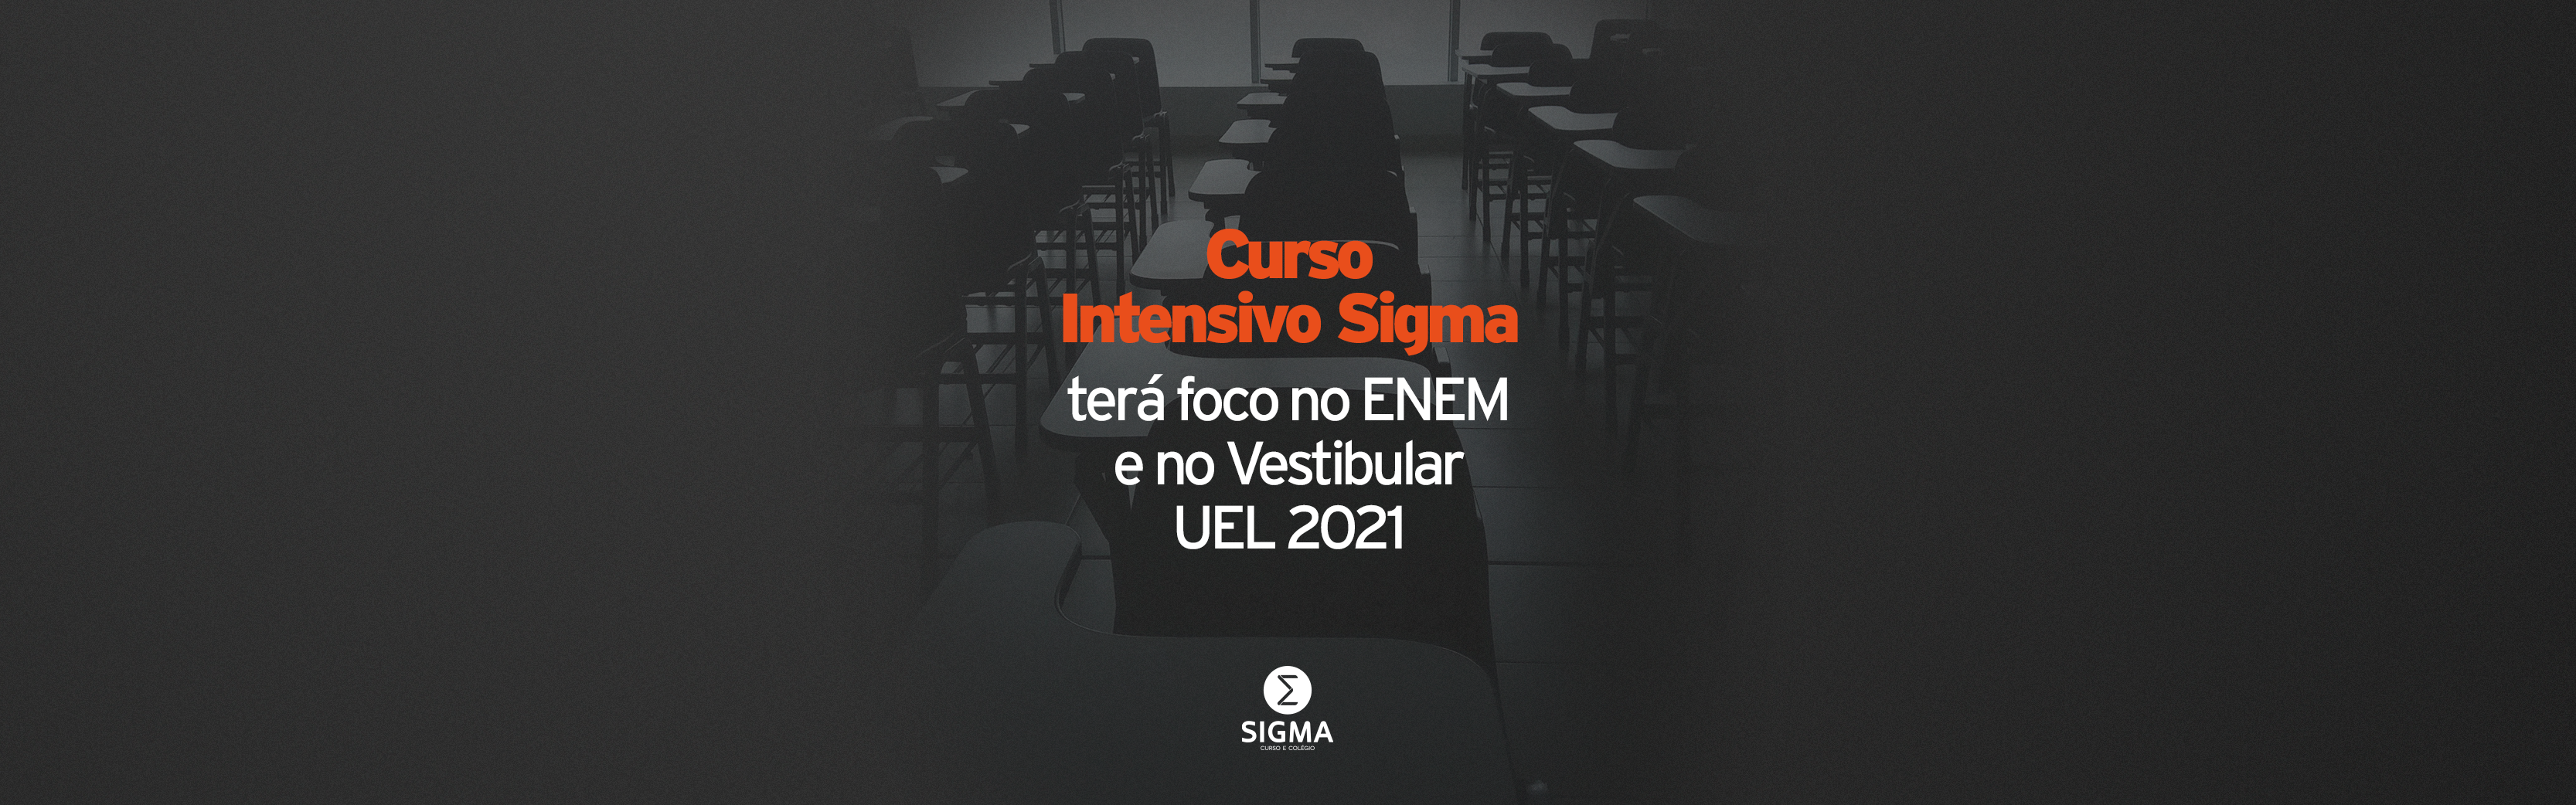 Curso Intensivo Sigma terá foco no ENEM e no Vestibular UEL 2021